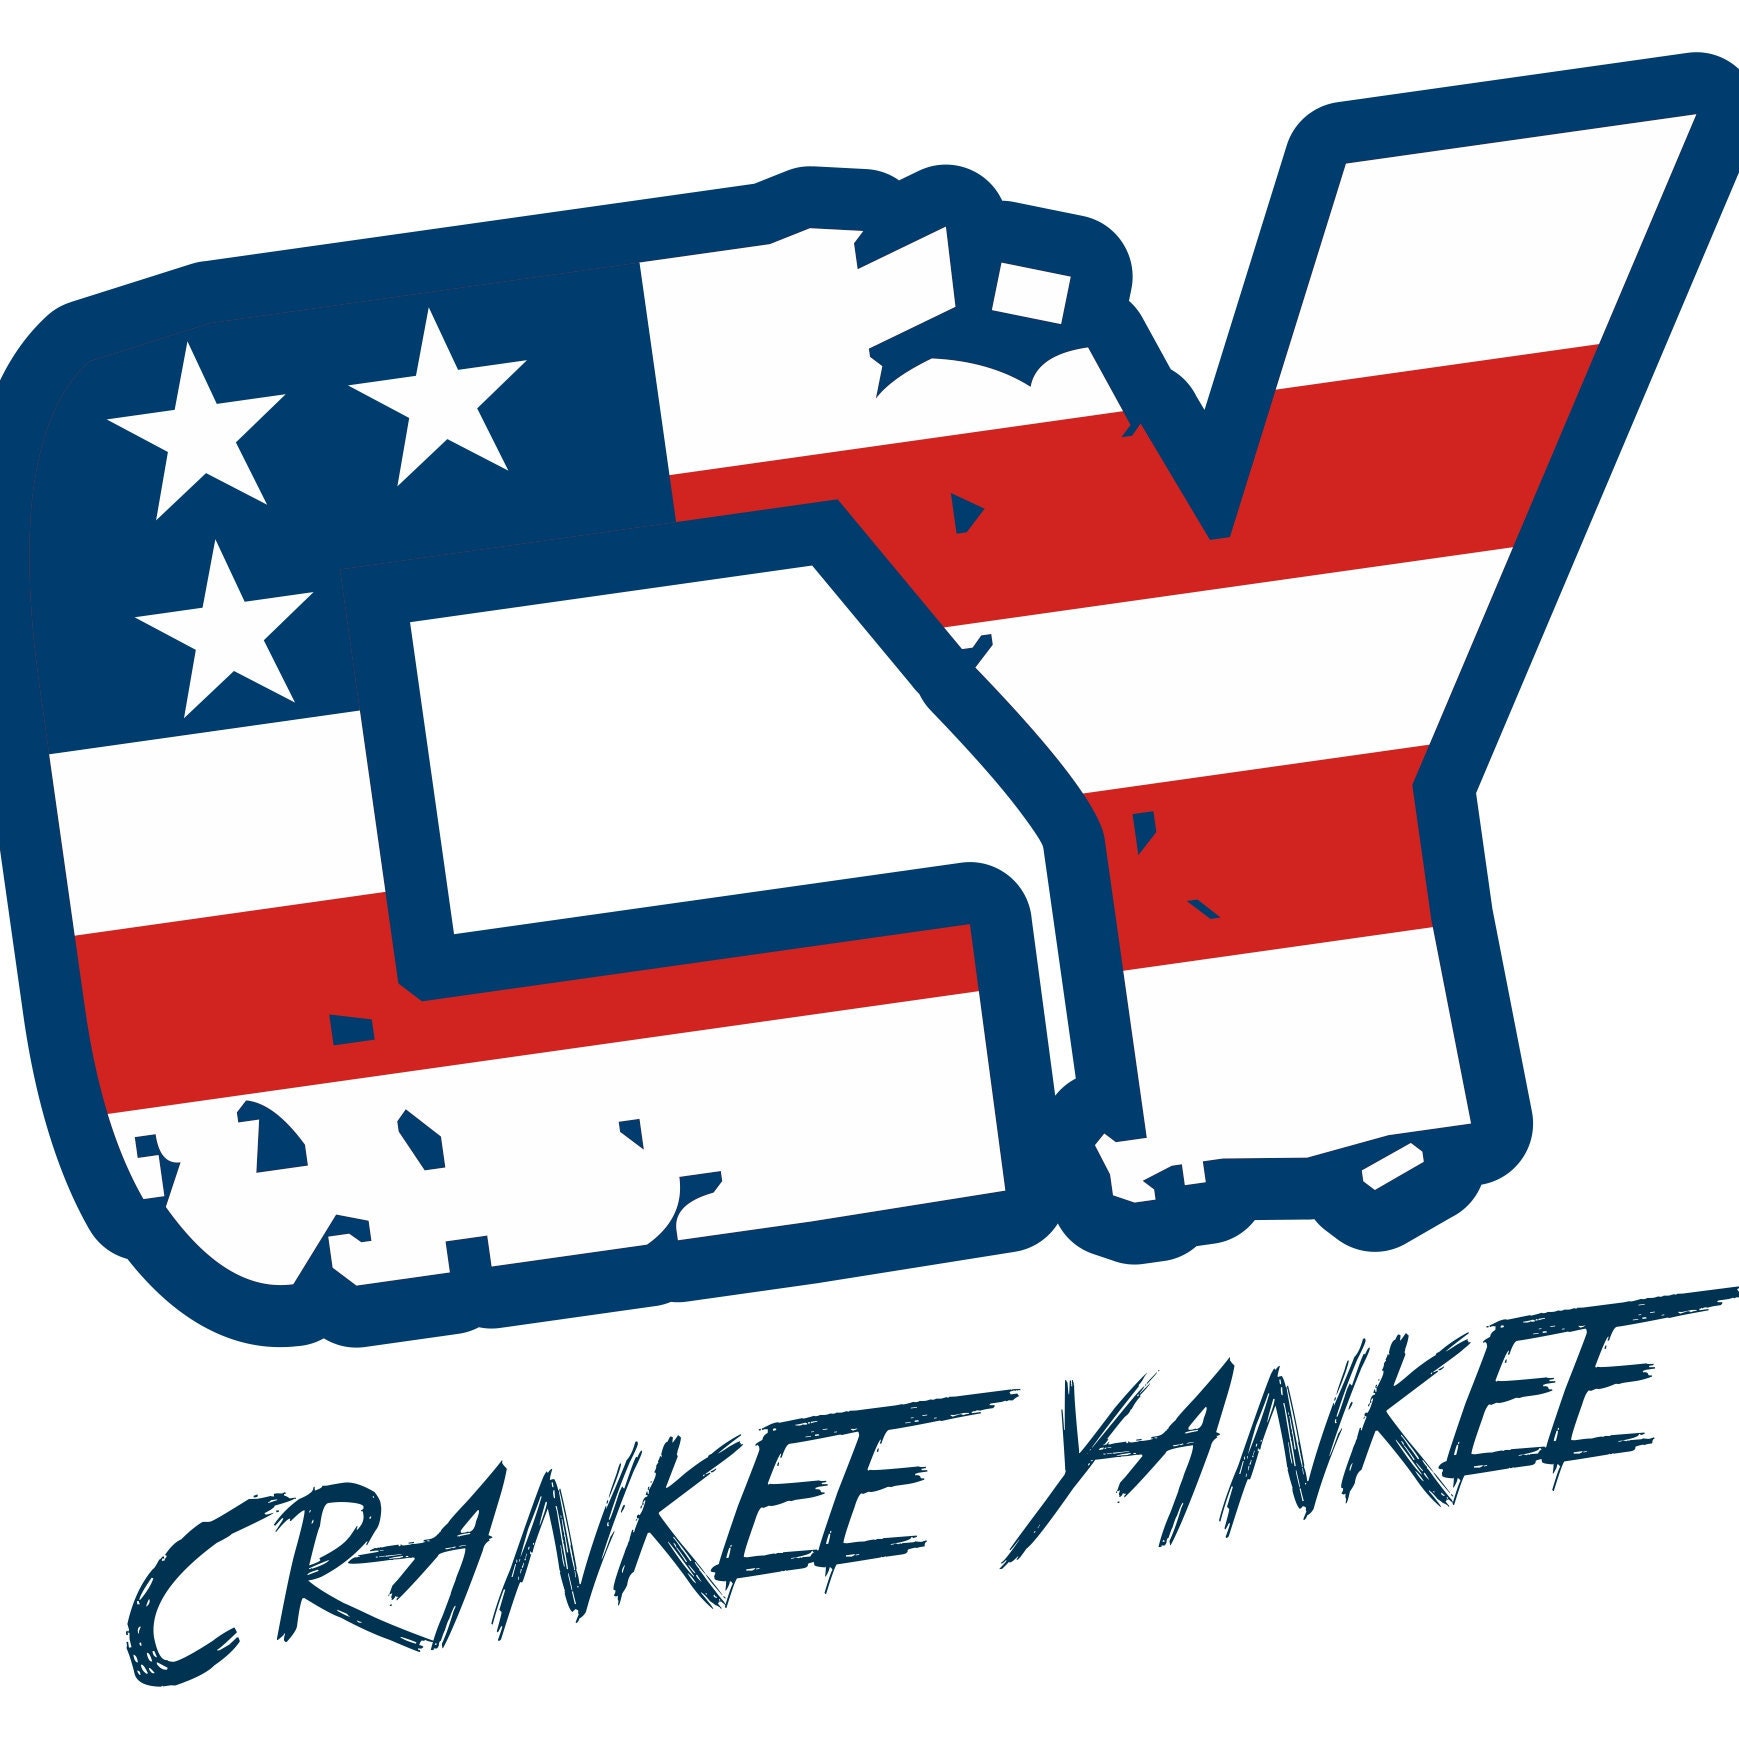 Crankee Yankee Youth Short-Sleeve Crew Neck X-Small / Royal Blue